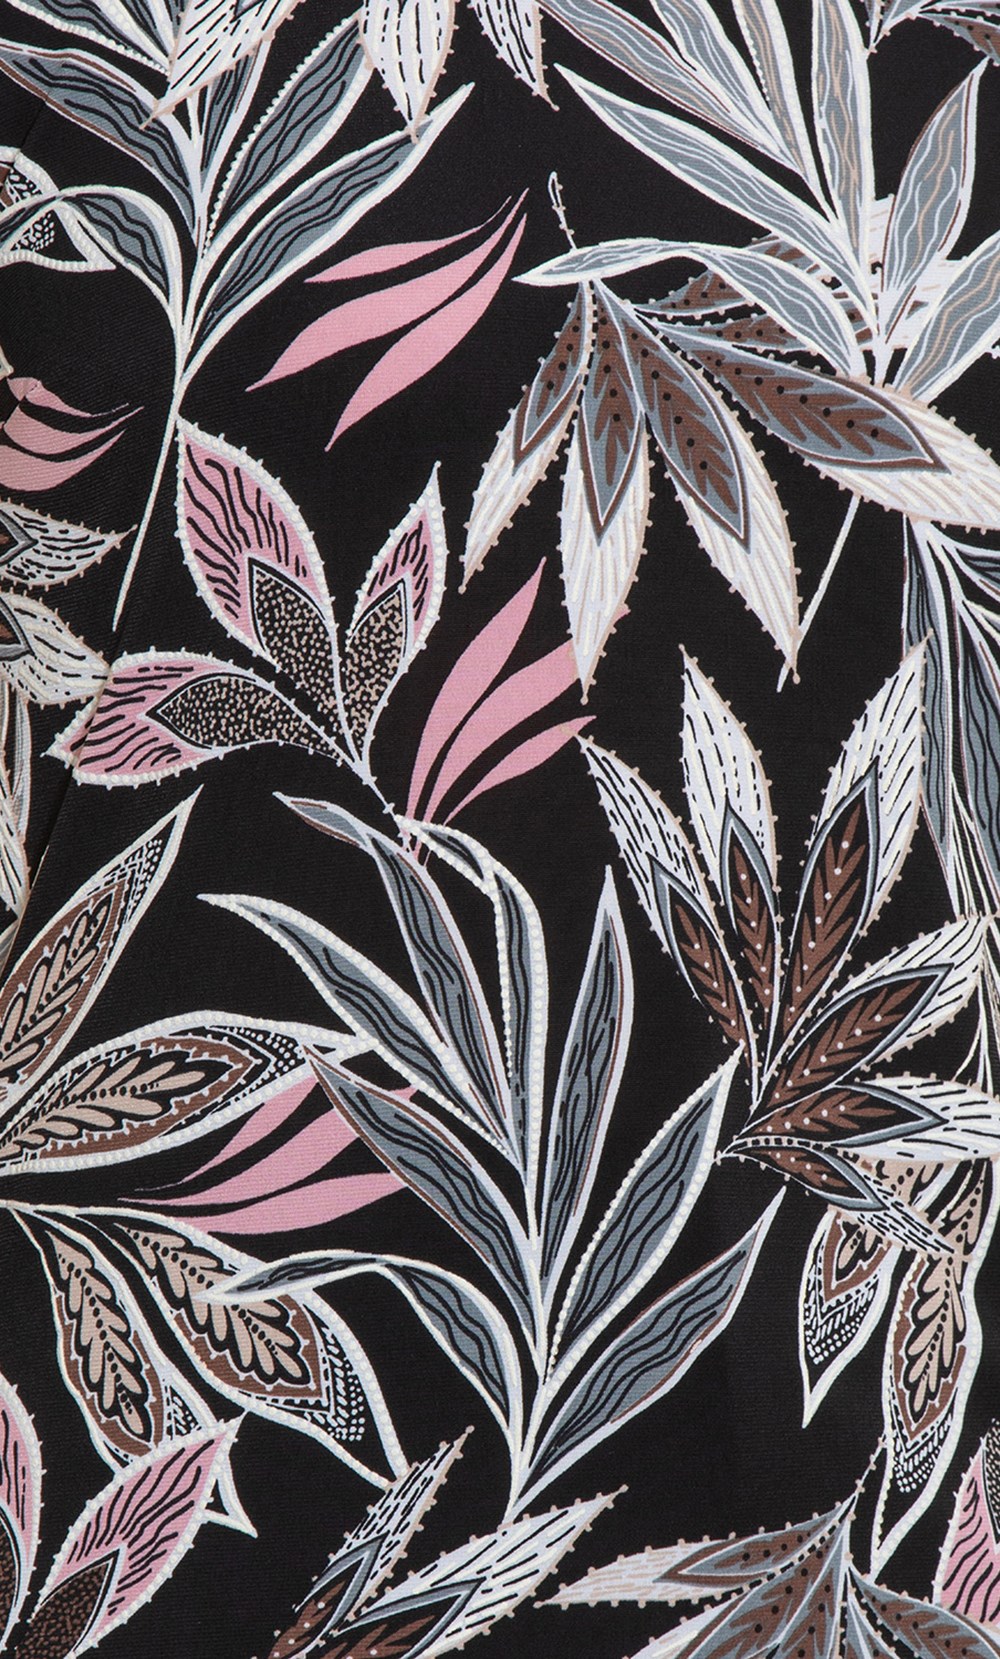 Anna Rose Textured Floral Print Top